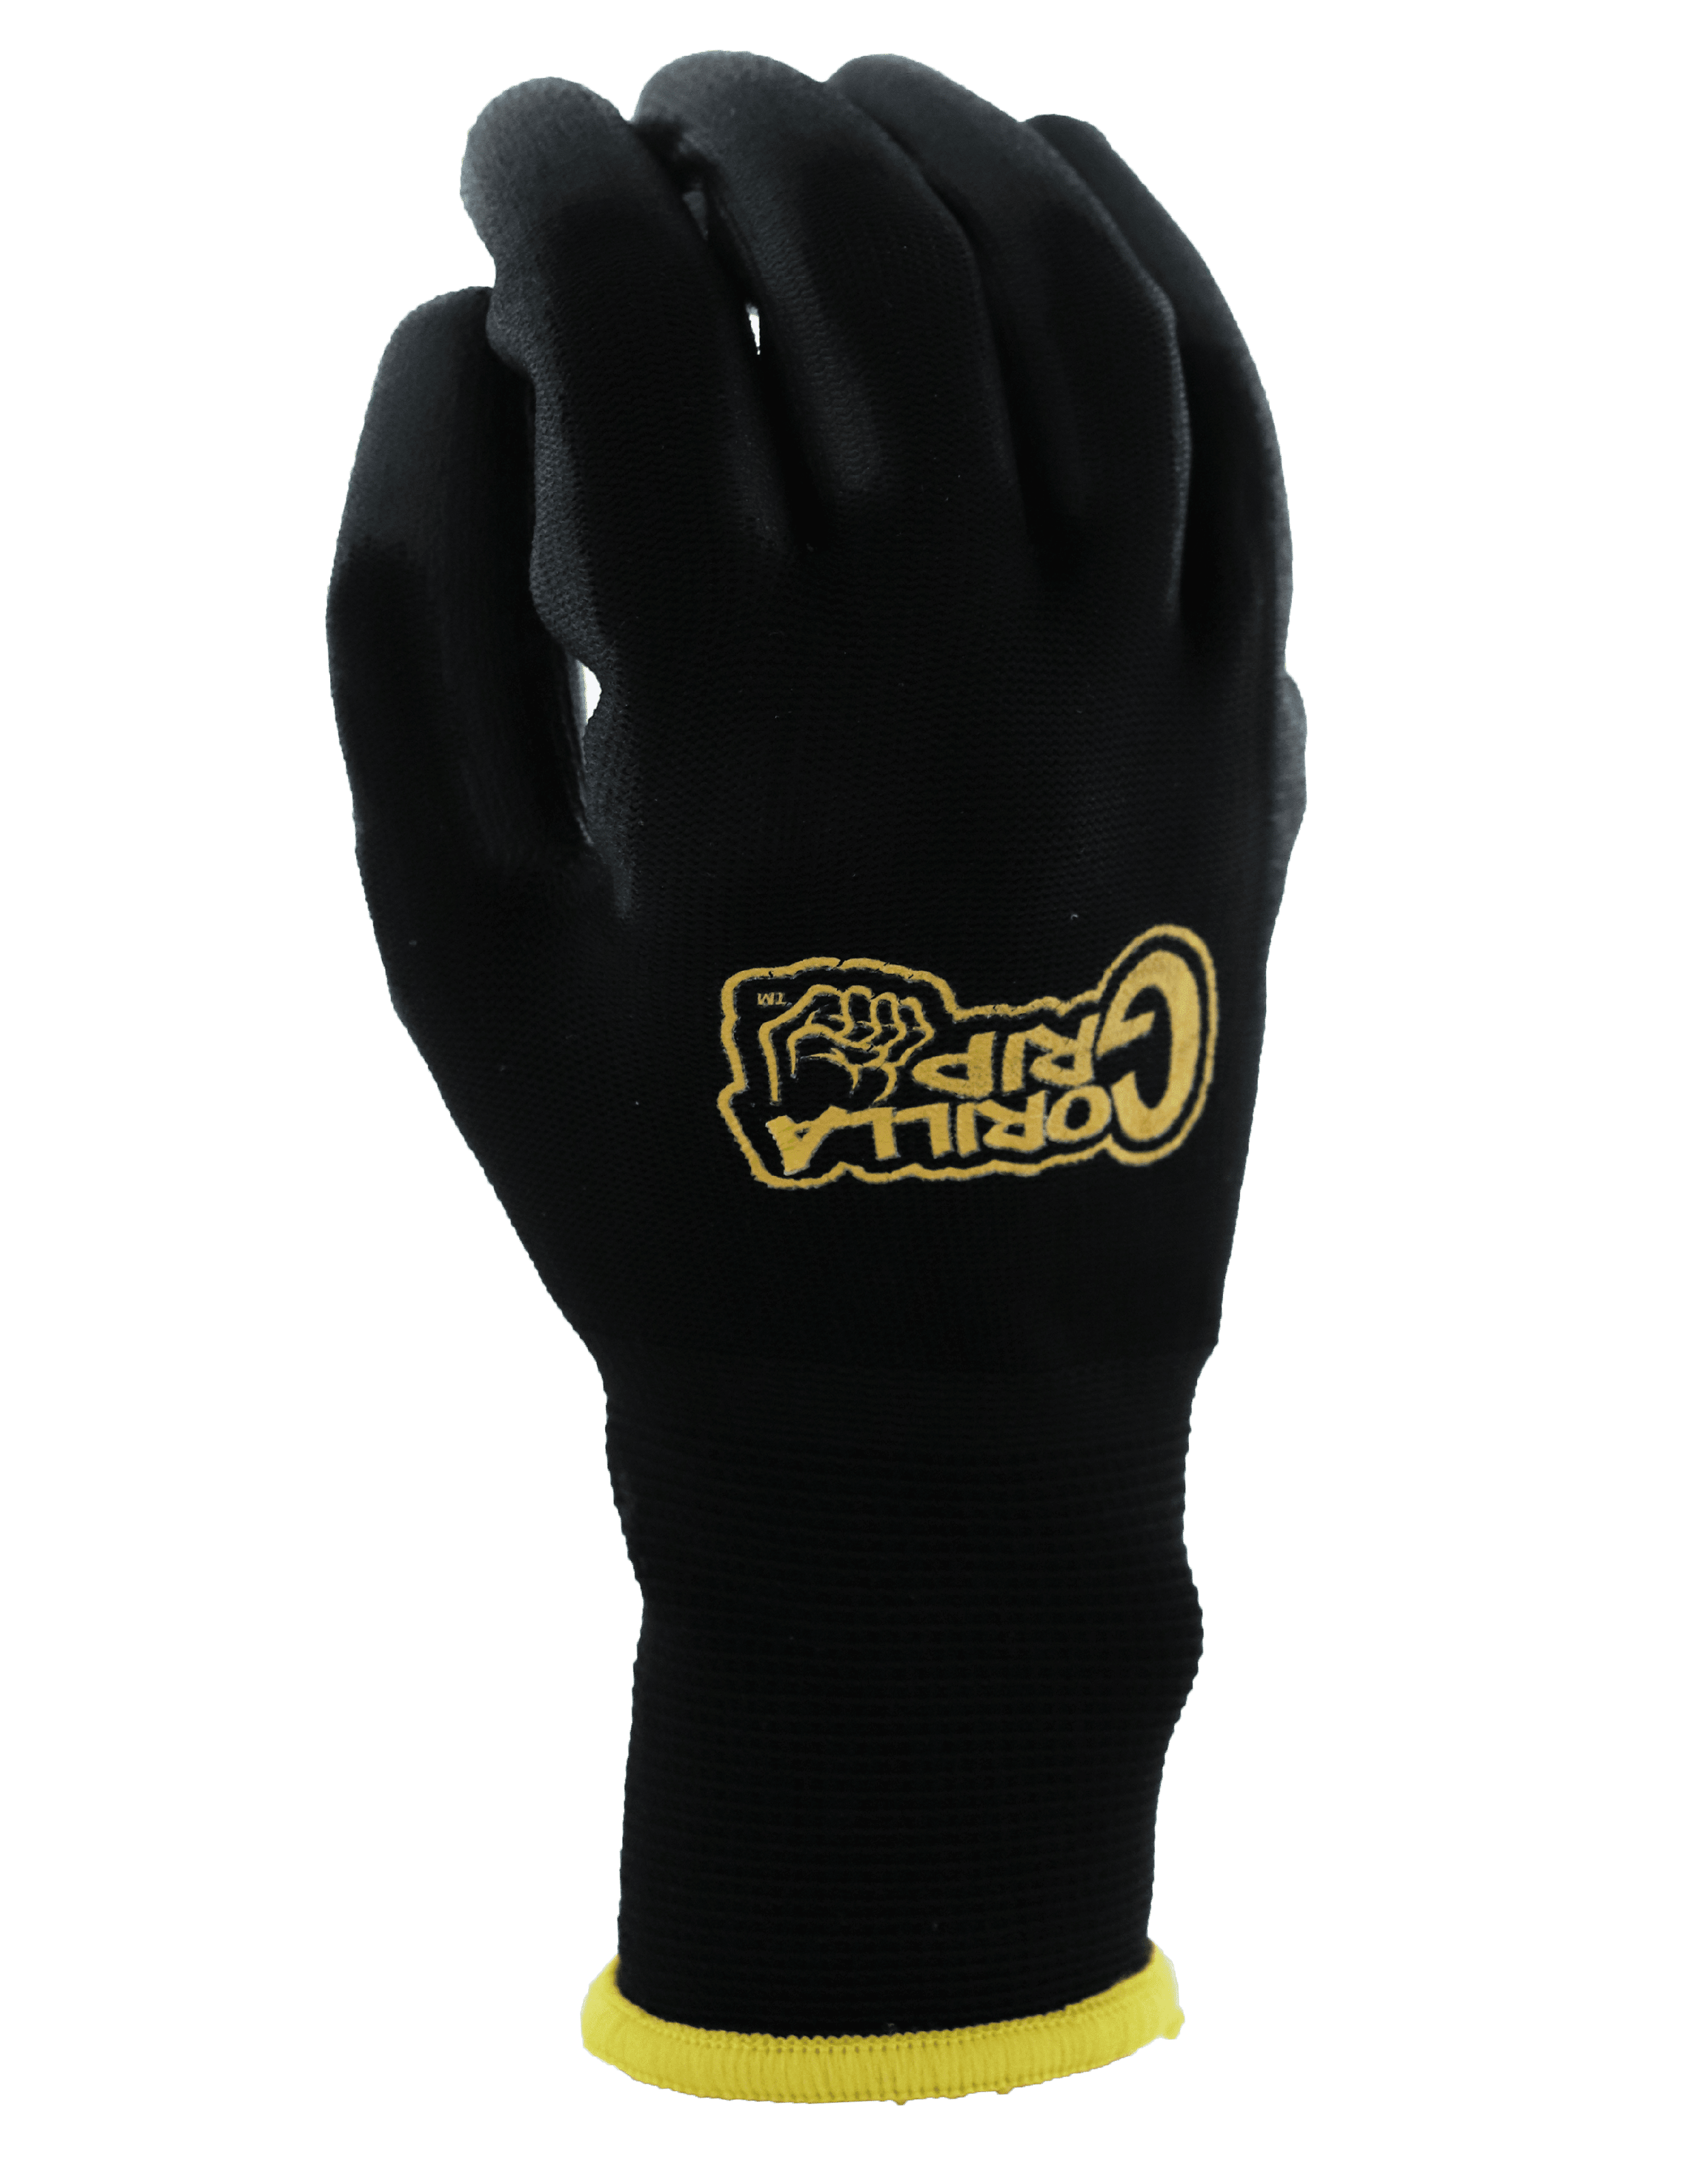 Grease Monkey X-Large Gorilla Grip Glove